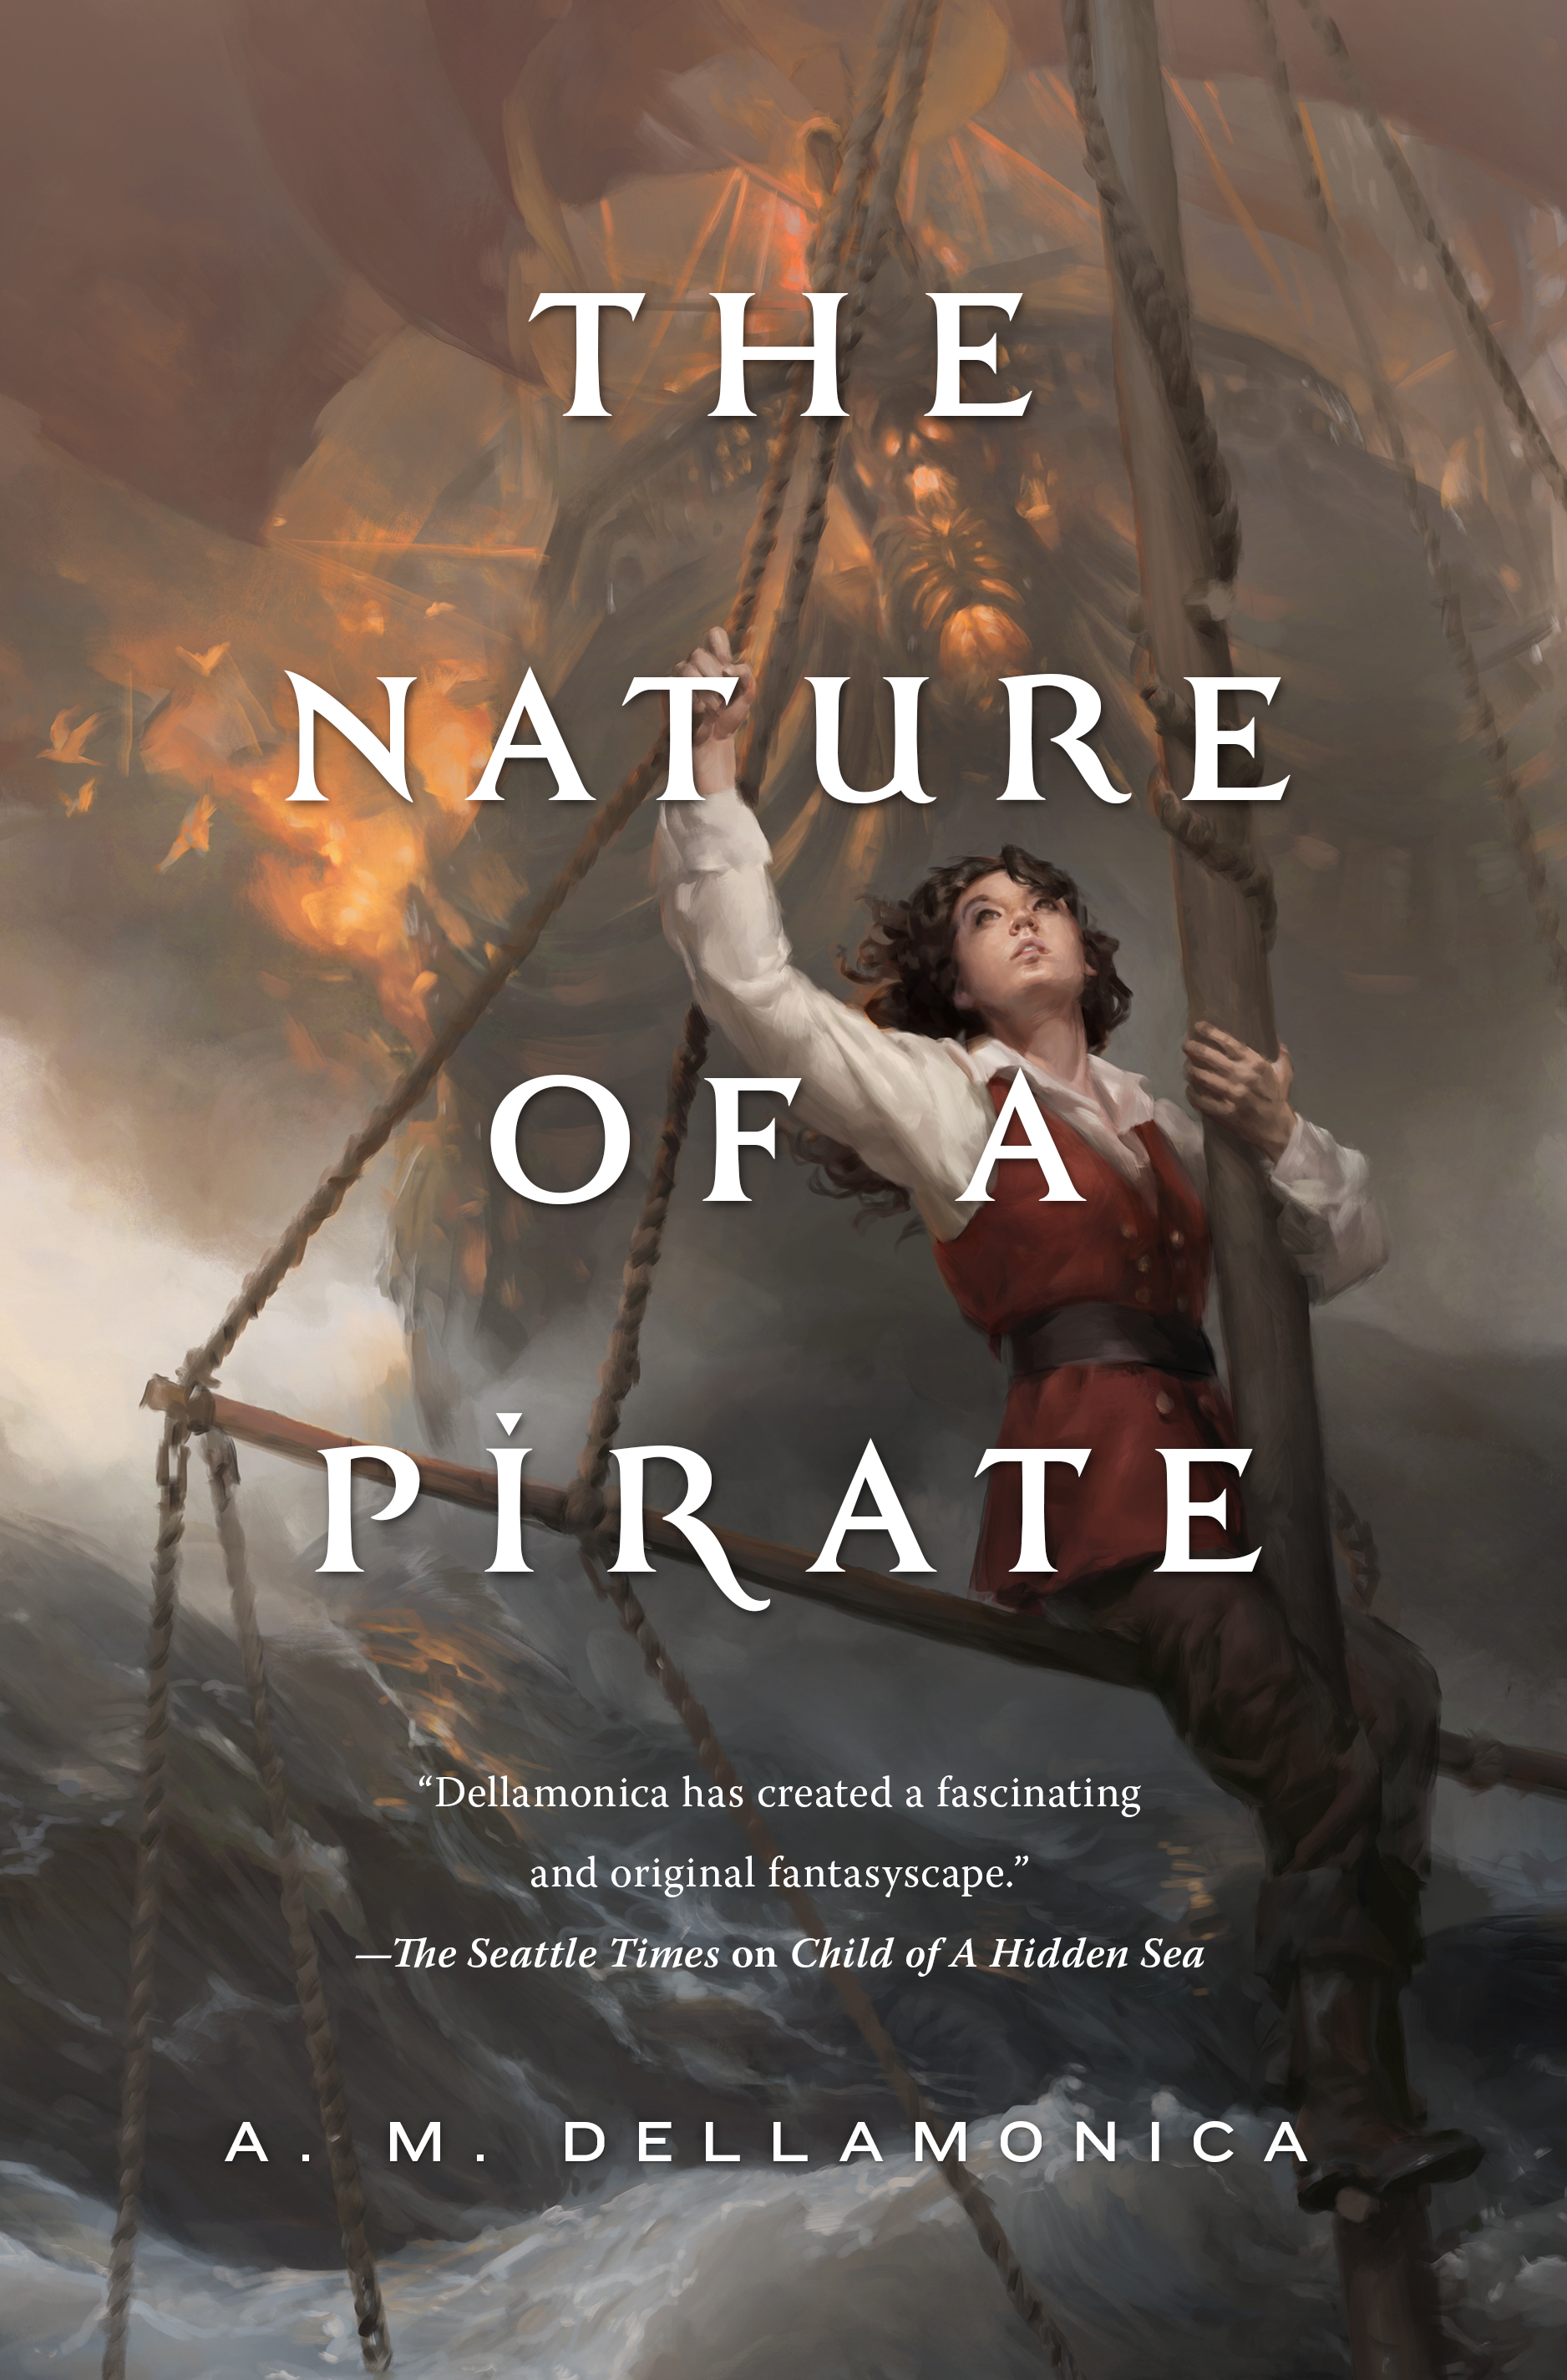 The Nature of a Pirate by A. M. Dellamonica